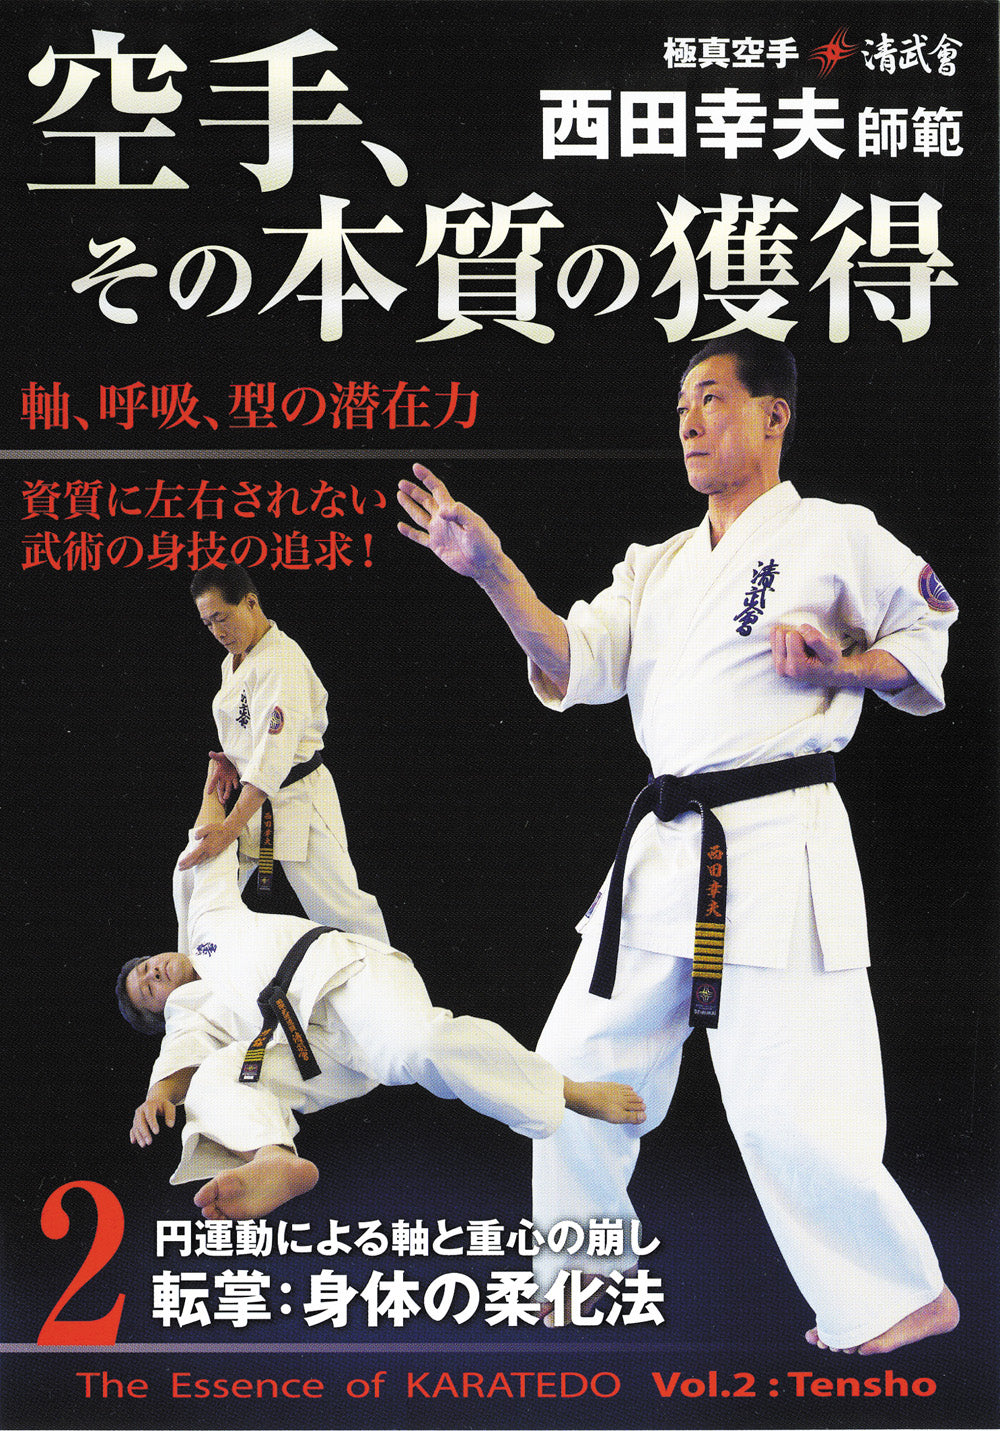 The Essence of Karatedo DVD 2: Tensho by Yukio Nishida